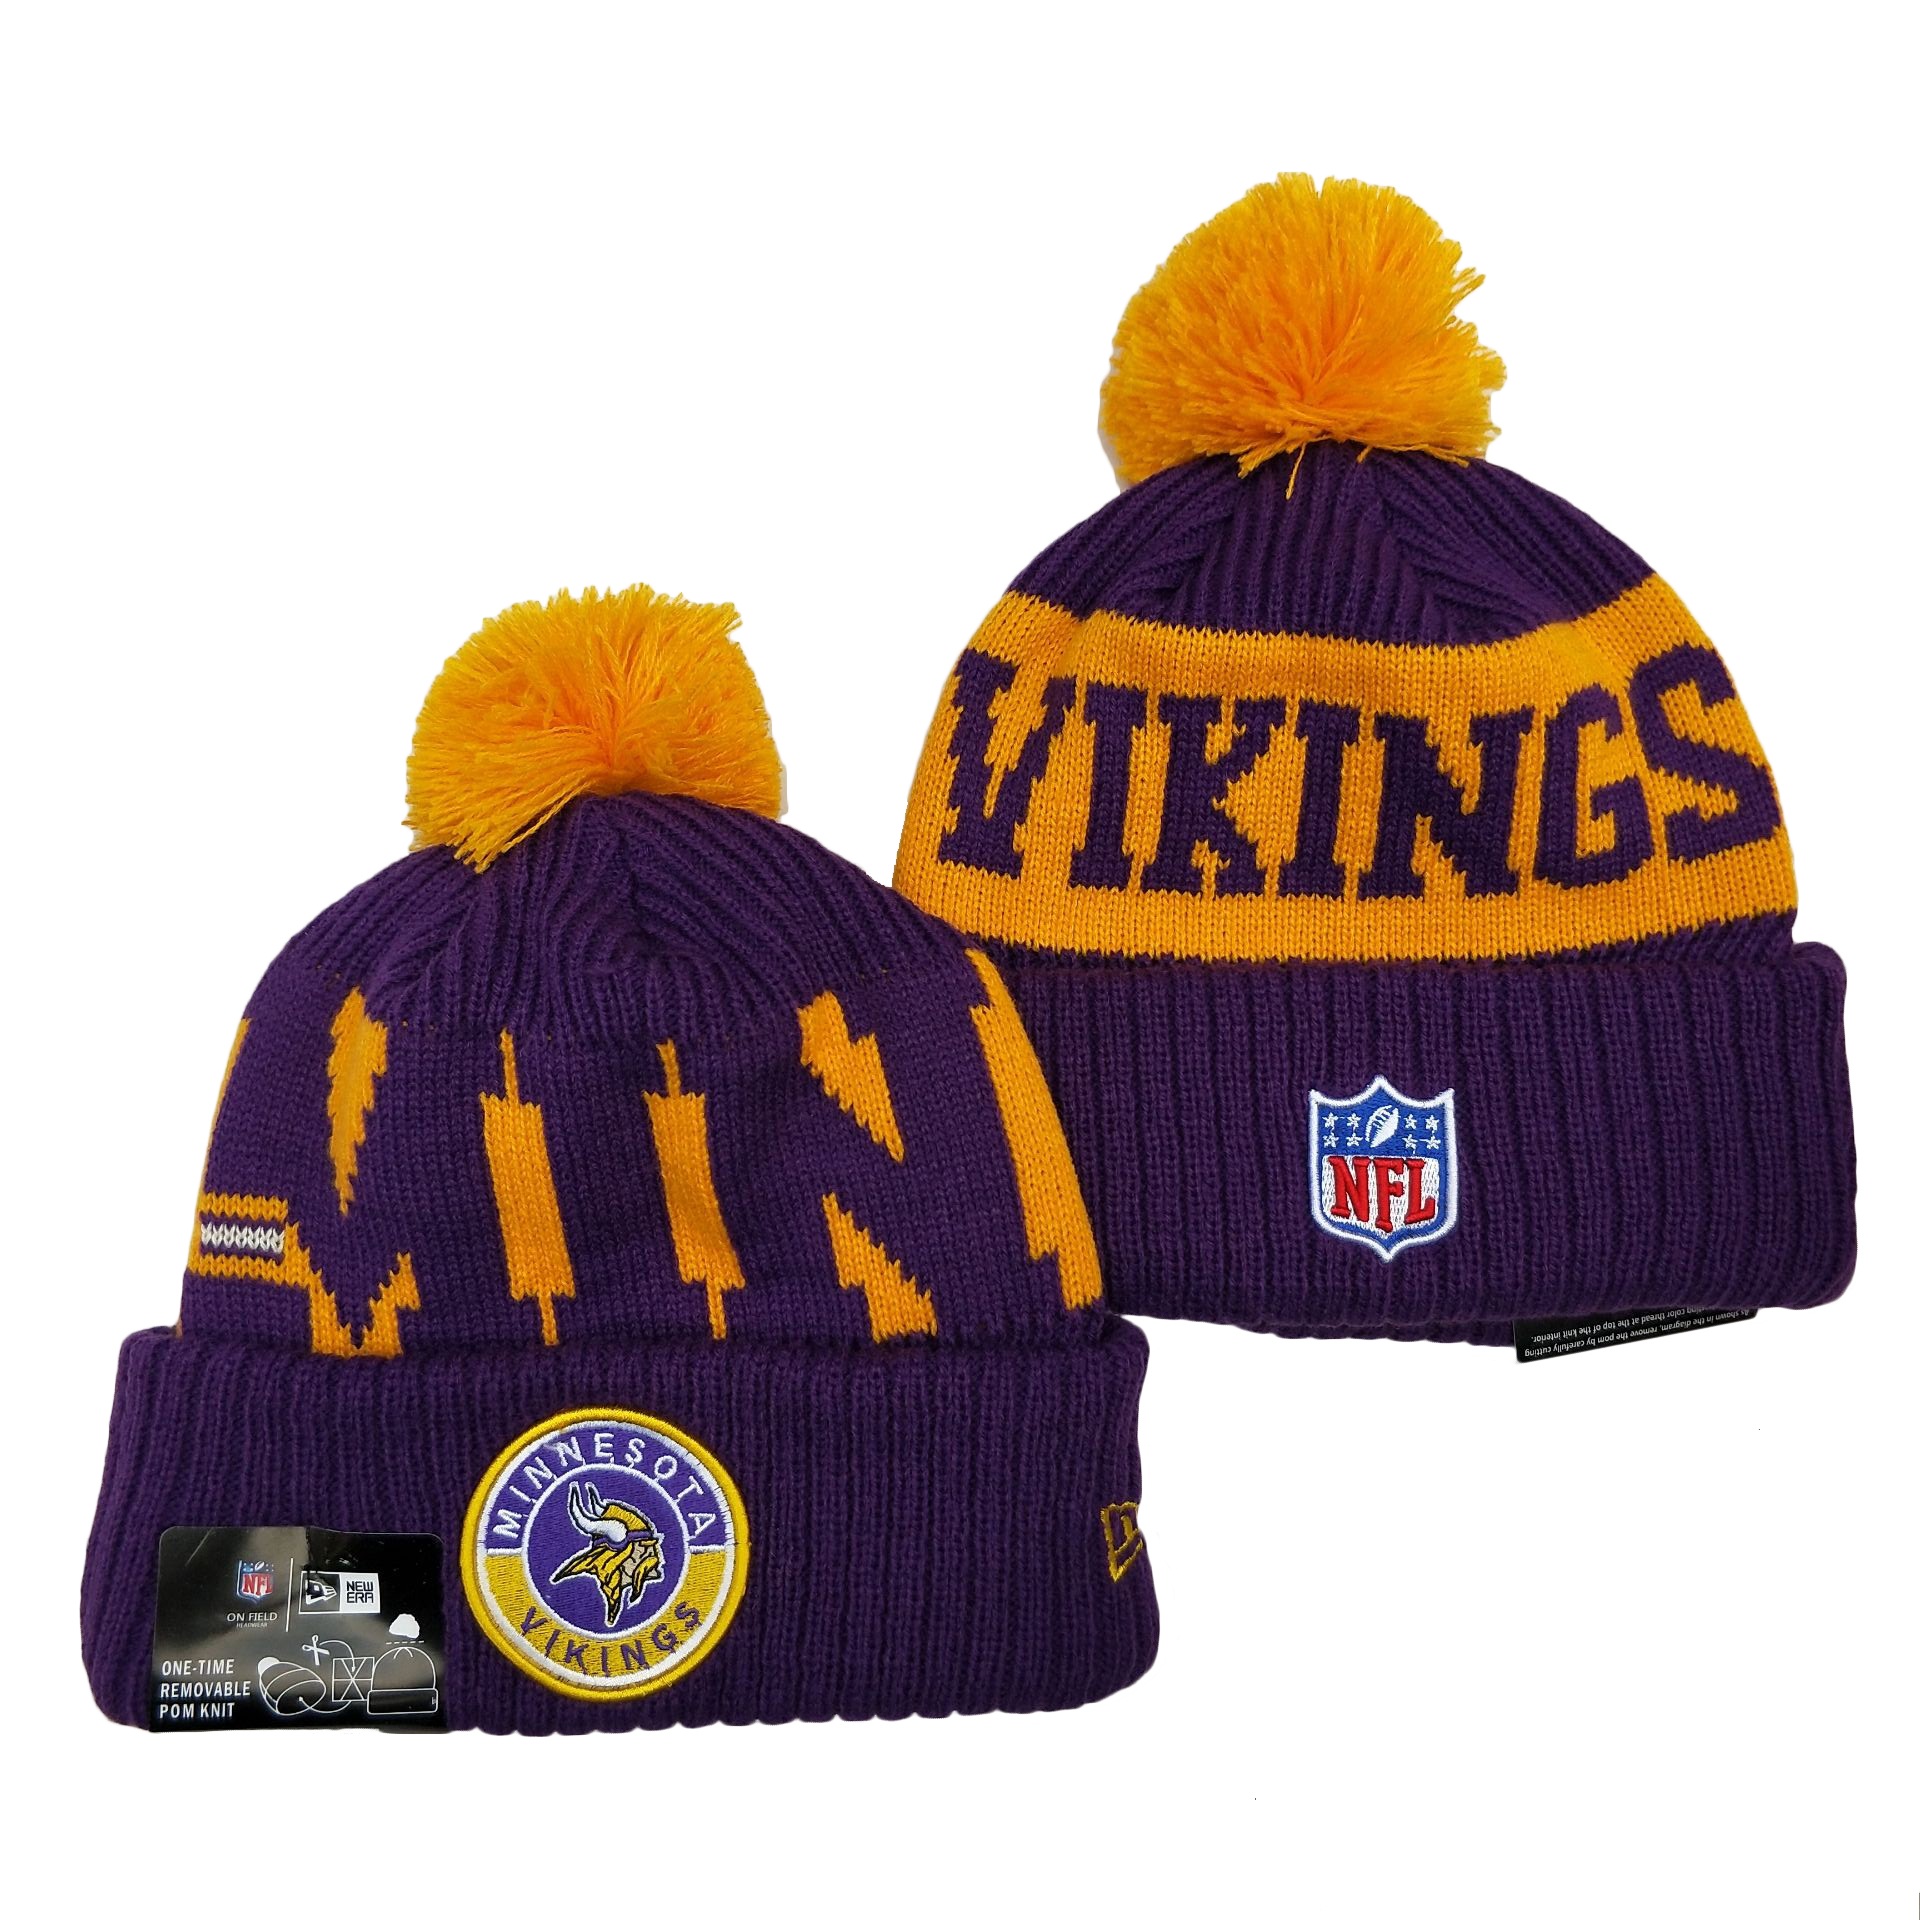 NFL Minnesota Vikings Beanies Knit Hats-YD1273